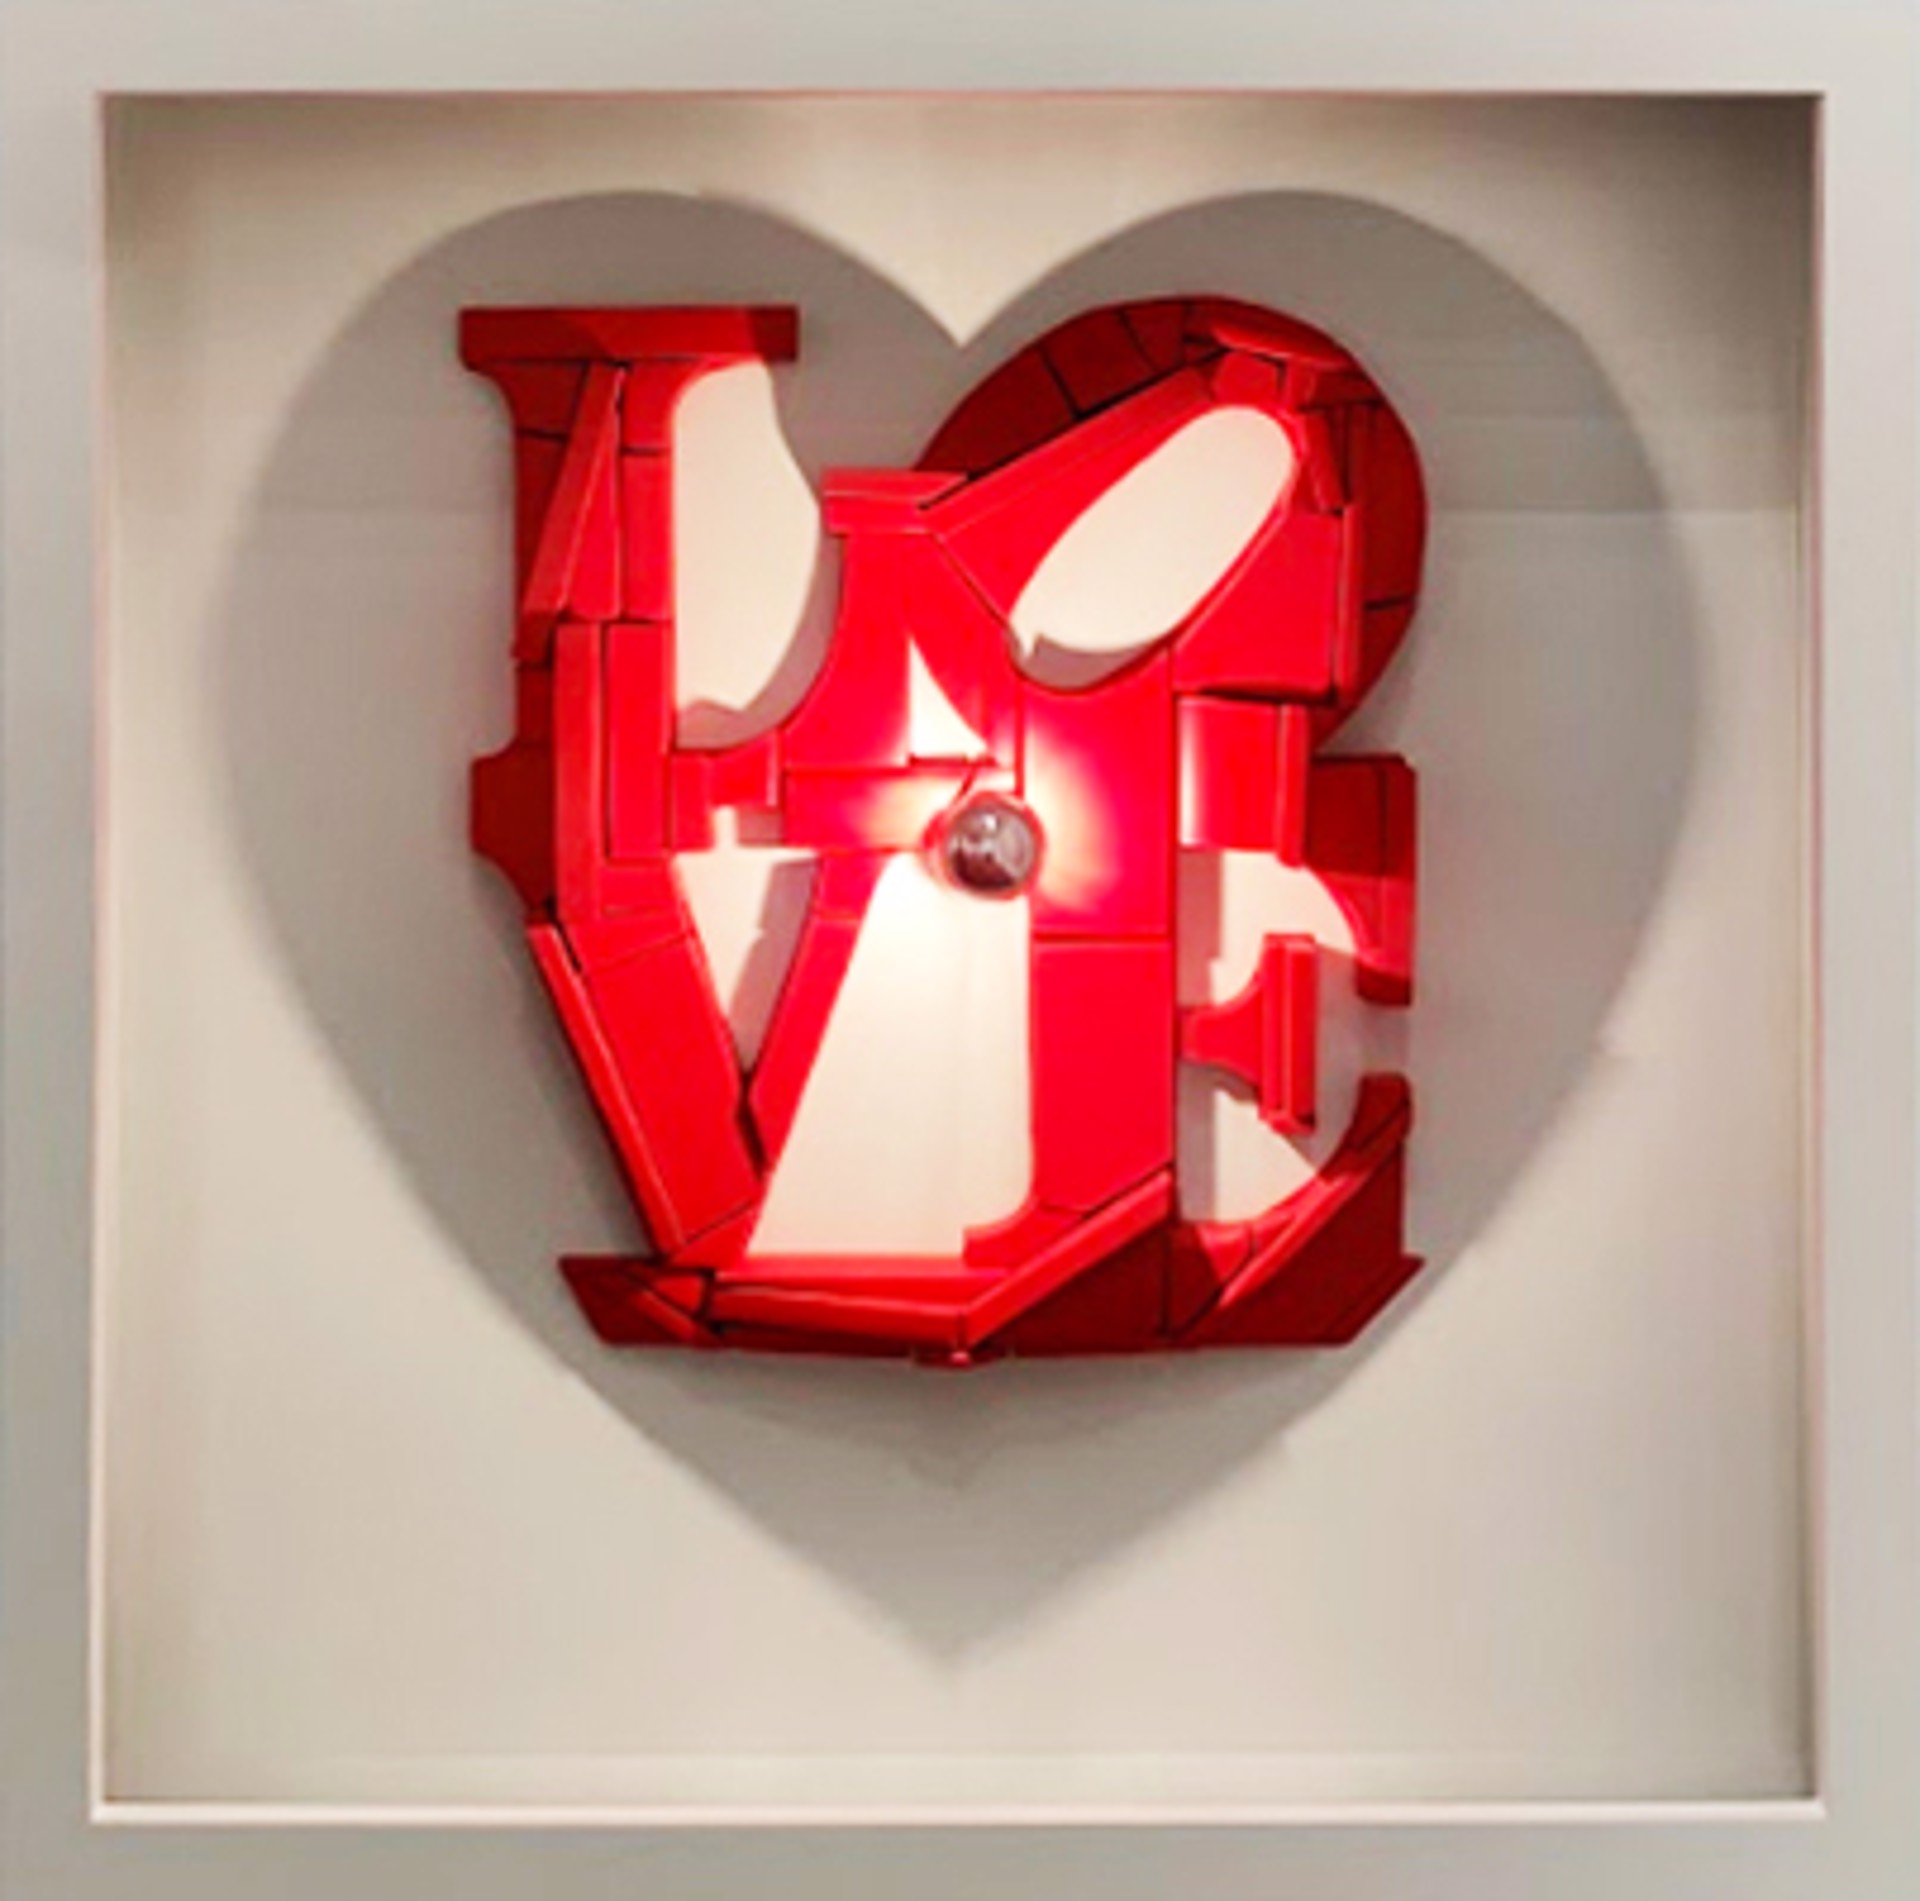 LOVE II by J.P. Goncalves, Silhouette